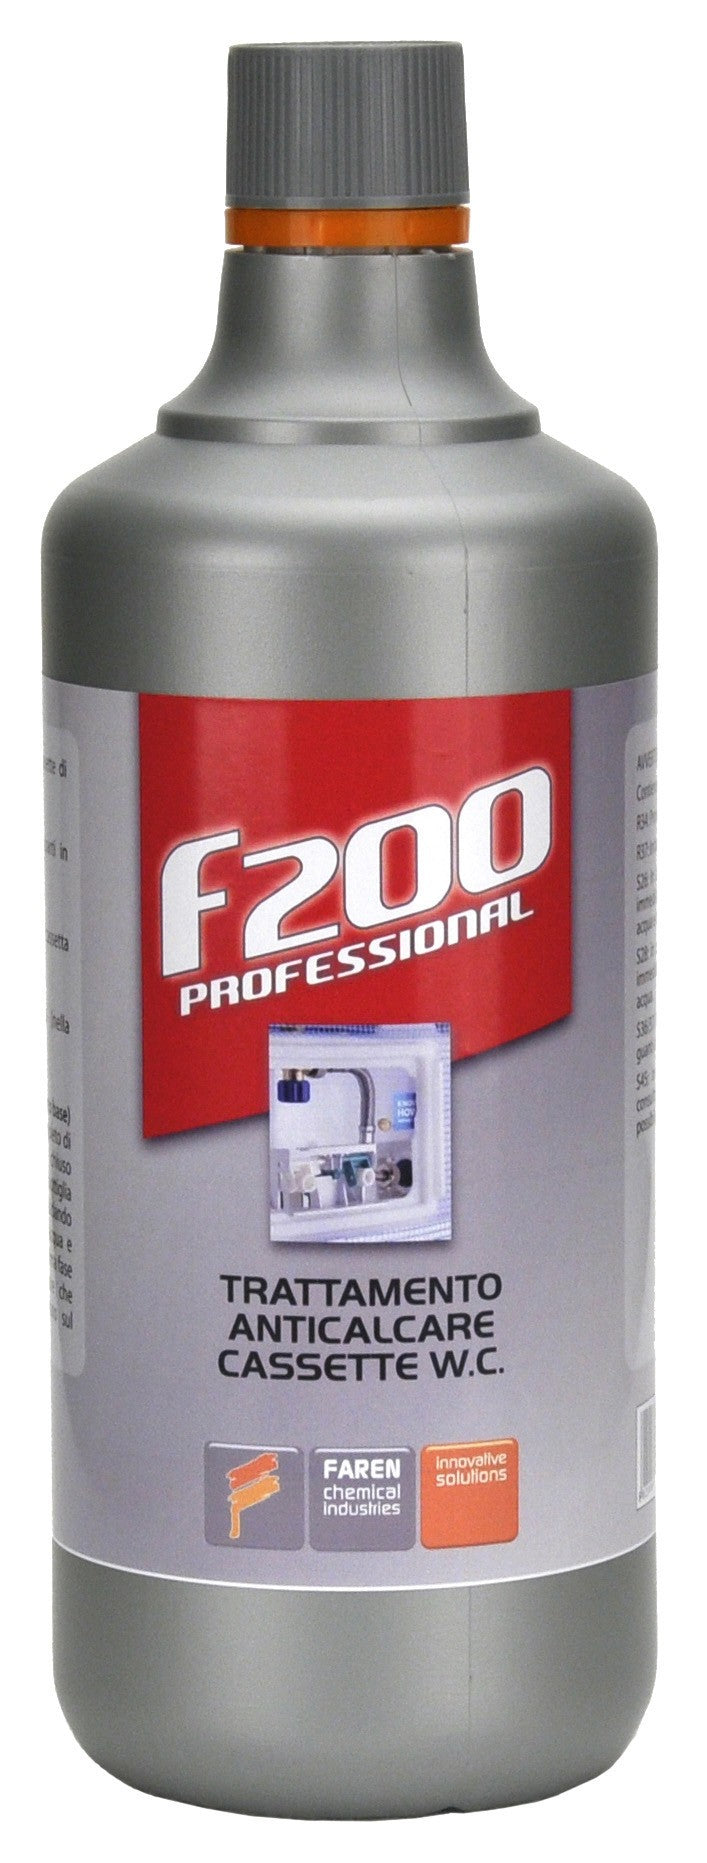 Anticalcare cassette wc f200 lt.1 FARMICOL